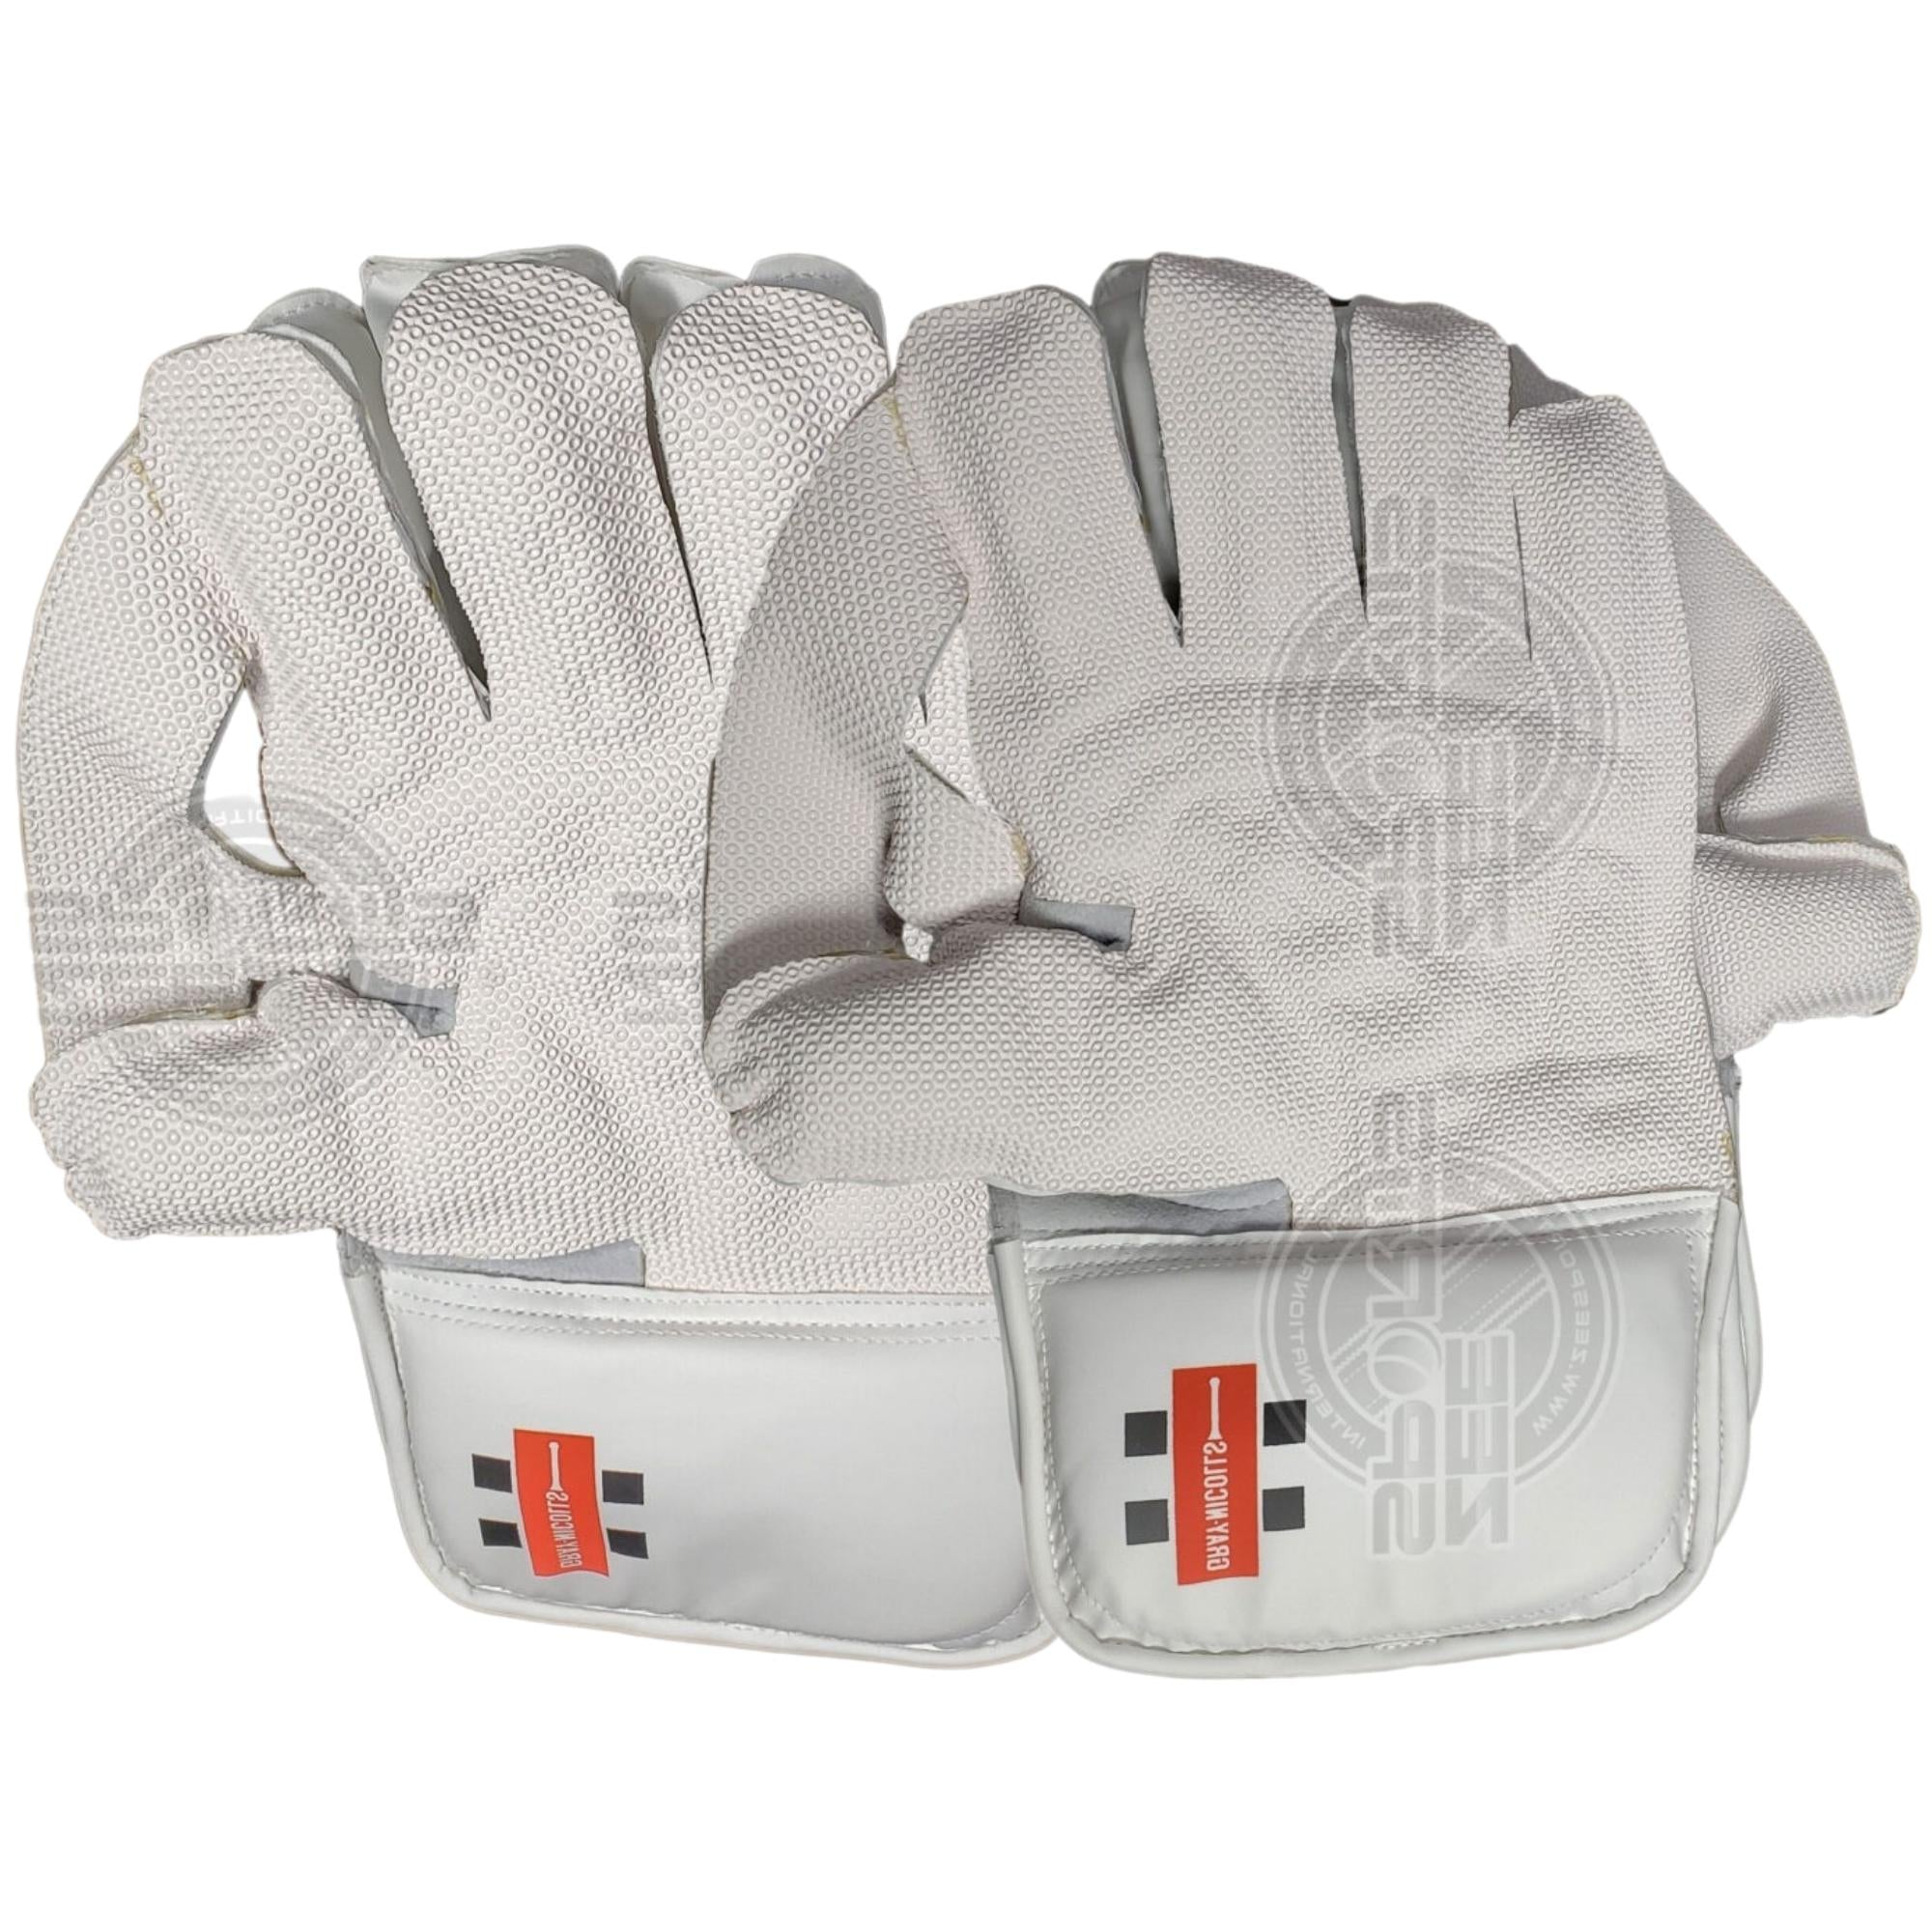 Gray Nicolls Wicket Keeping Gloves Prestige